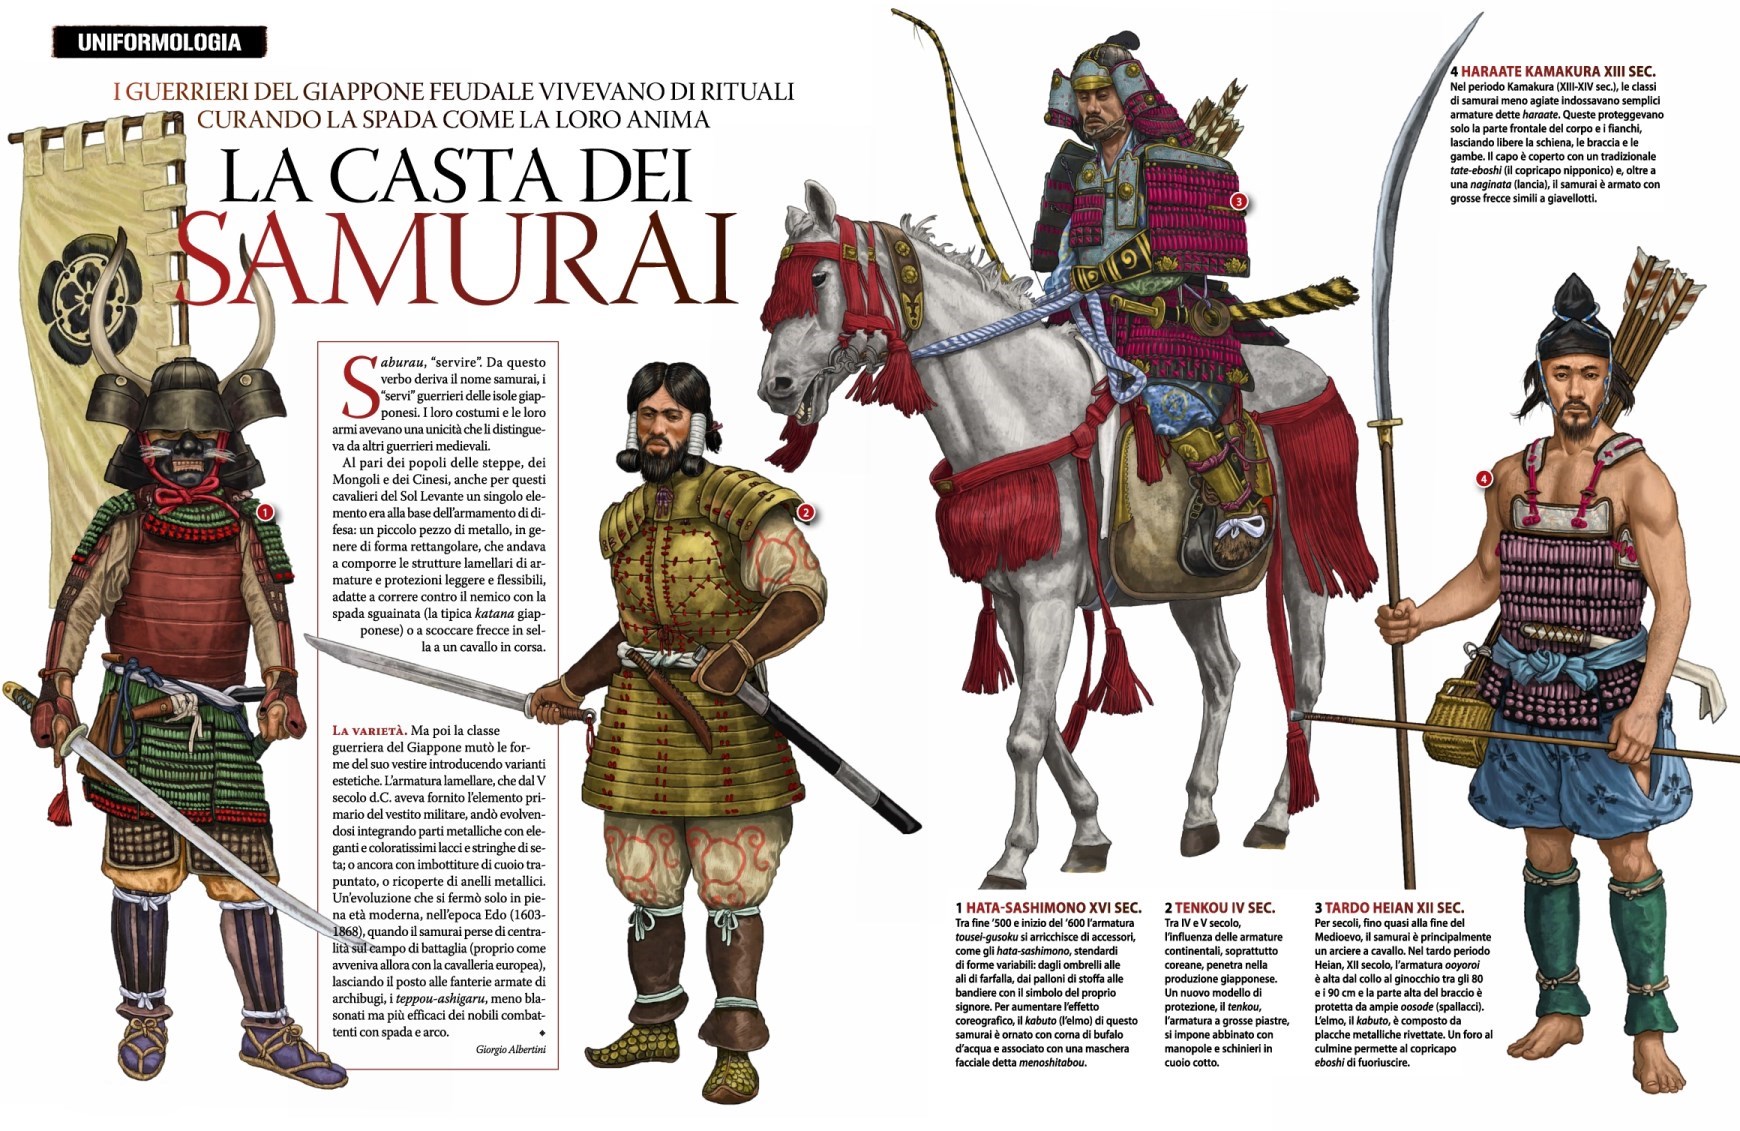 Samurai The warrior class of feudal Japan